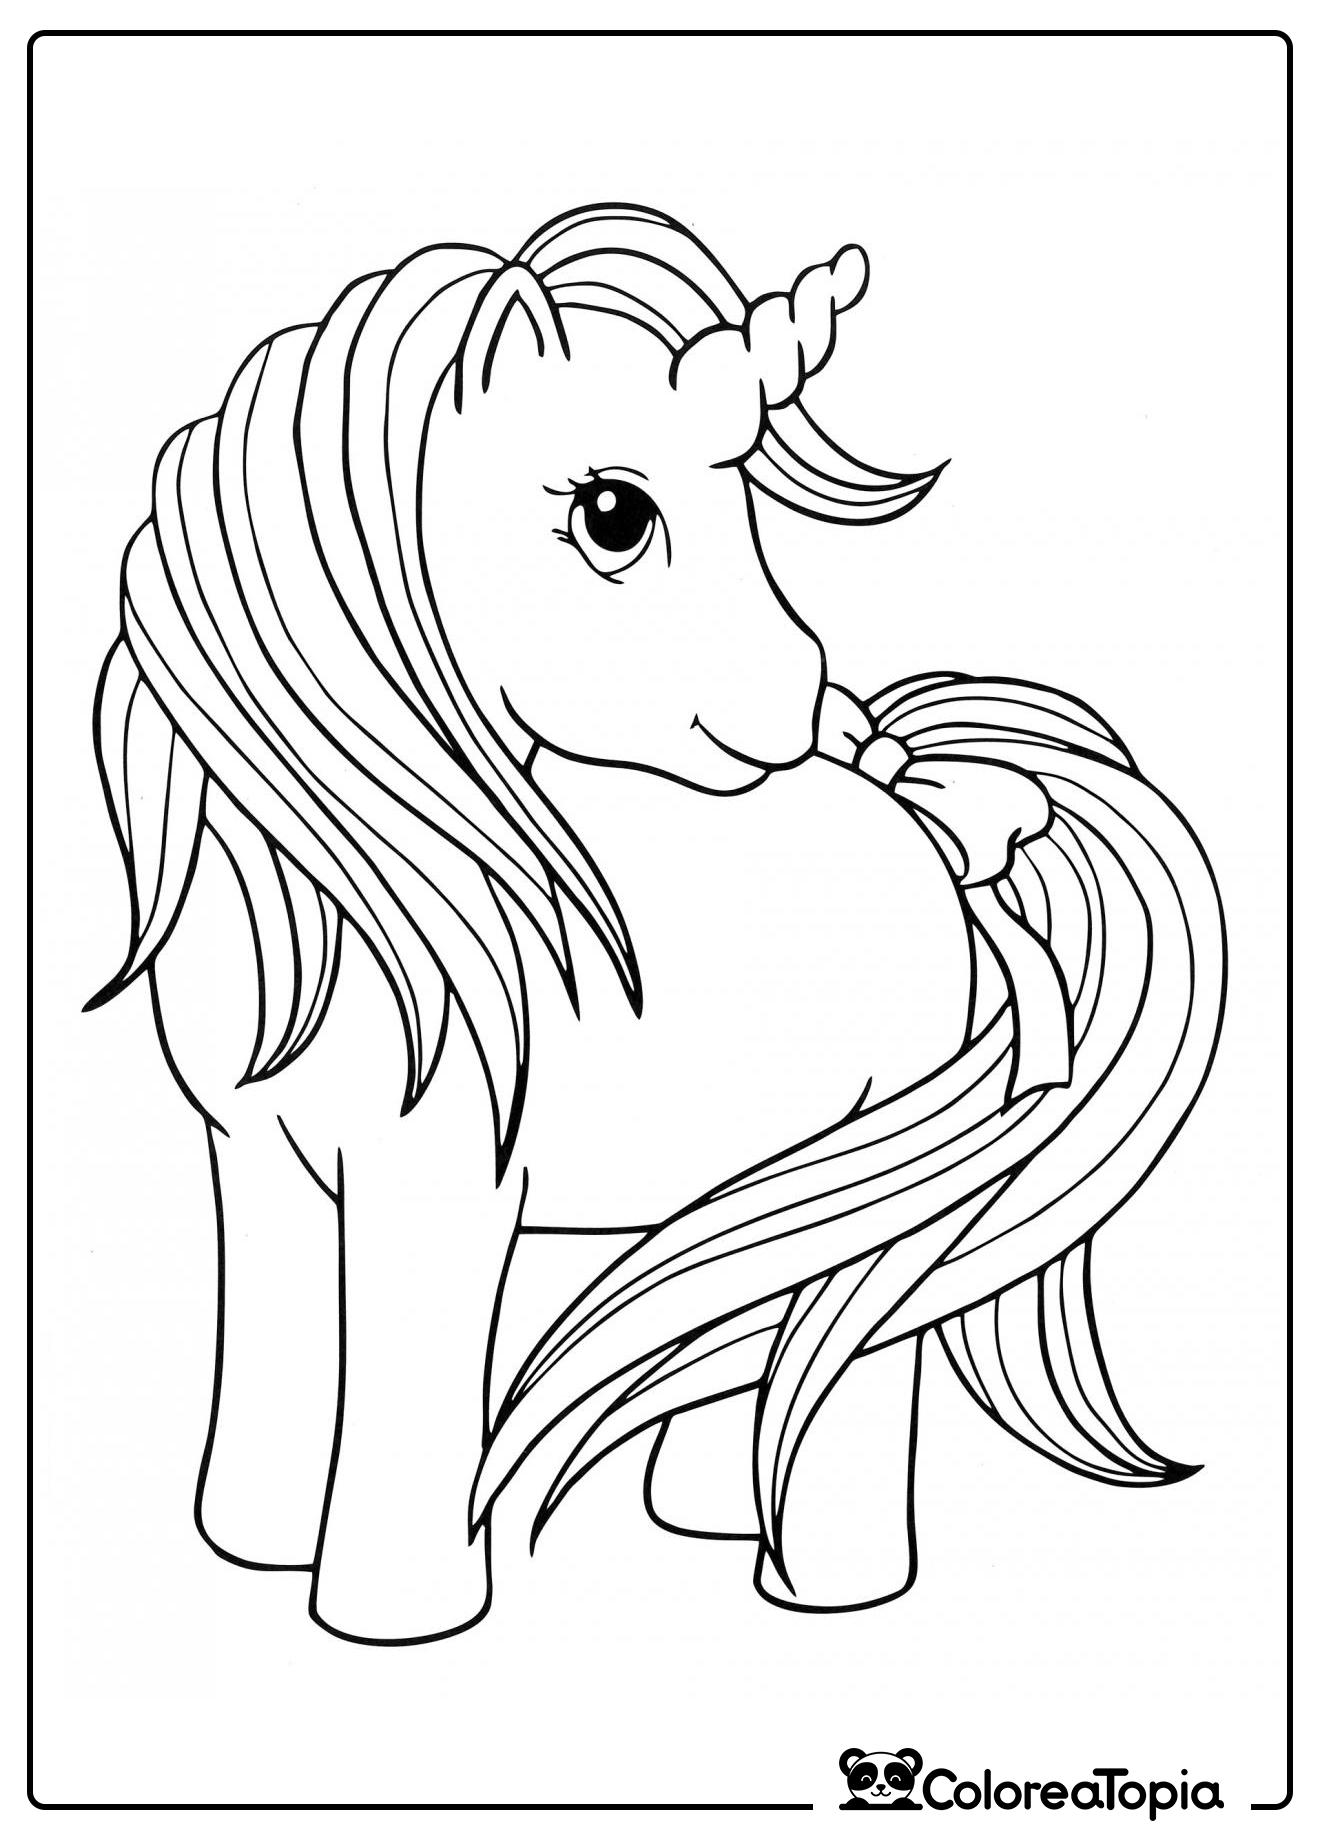 Unicornio lindo - dibujo para colorear